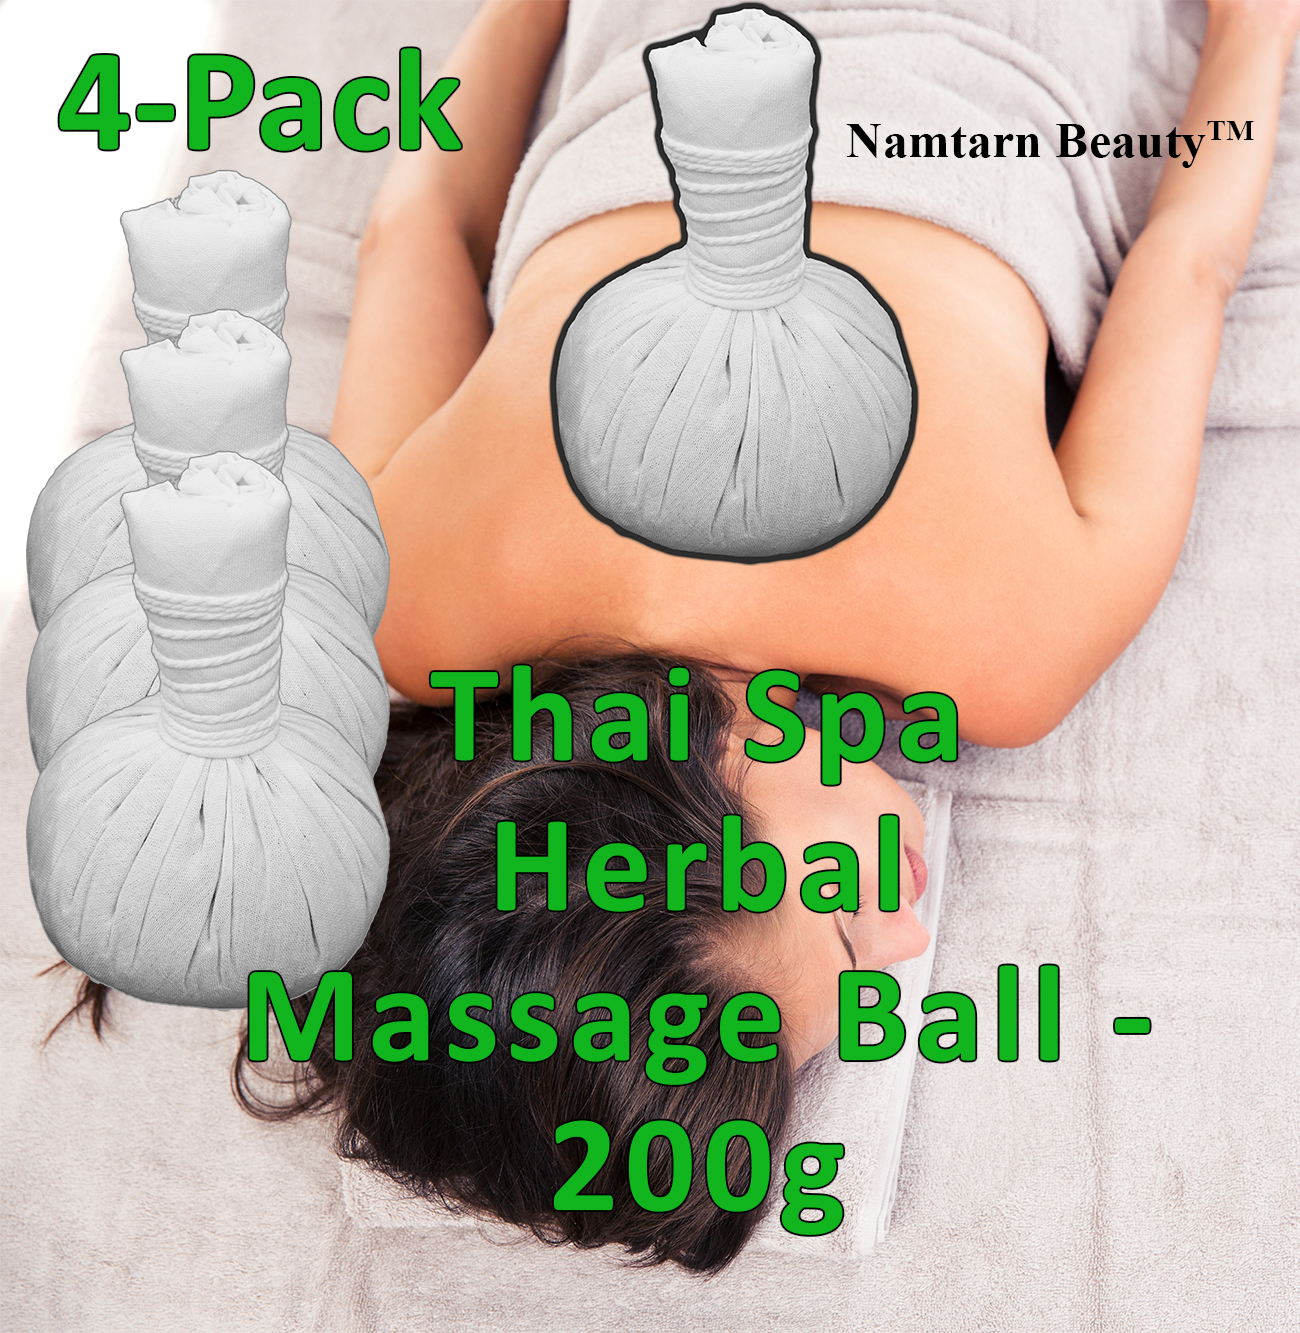 Namtarn Beauty Thai Massage Ball x4 img 1 Woman on Massage Table with product